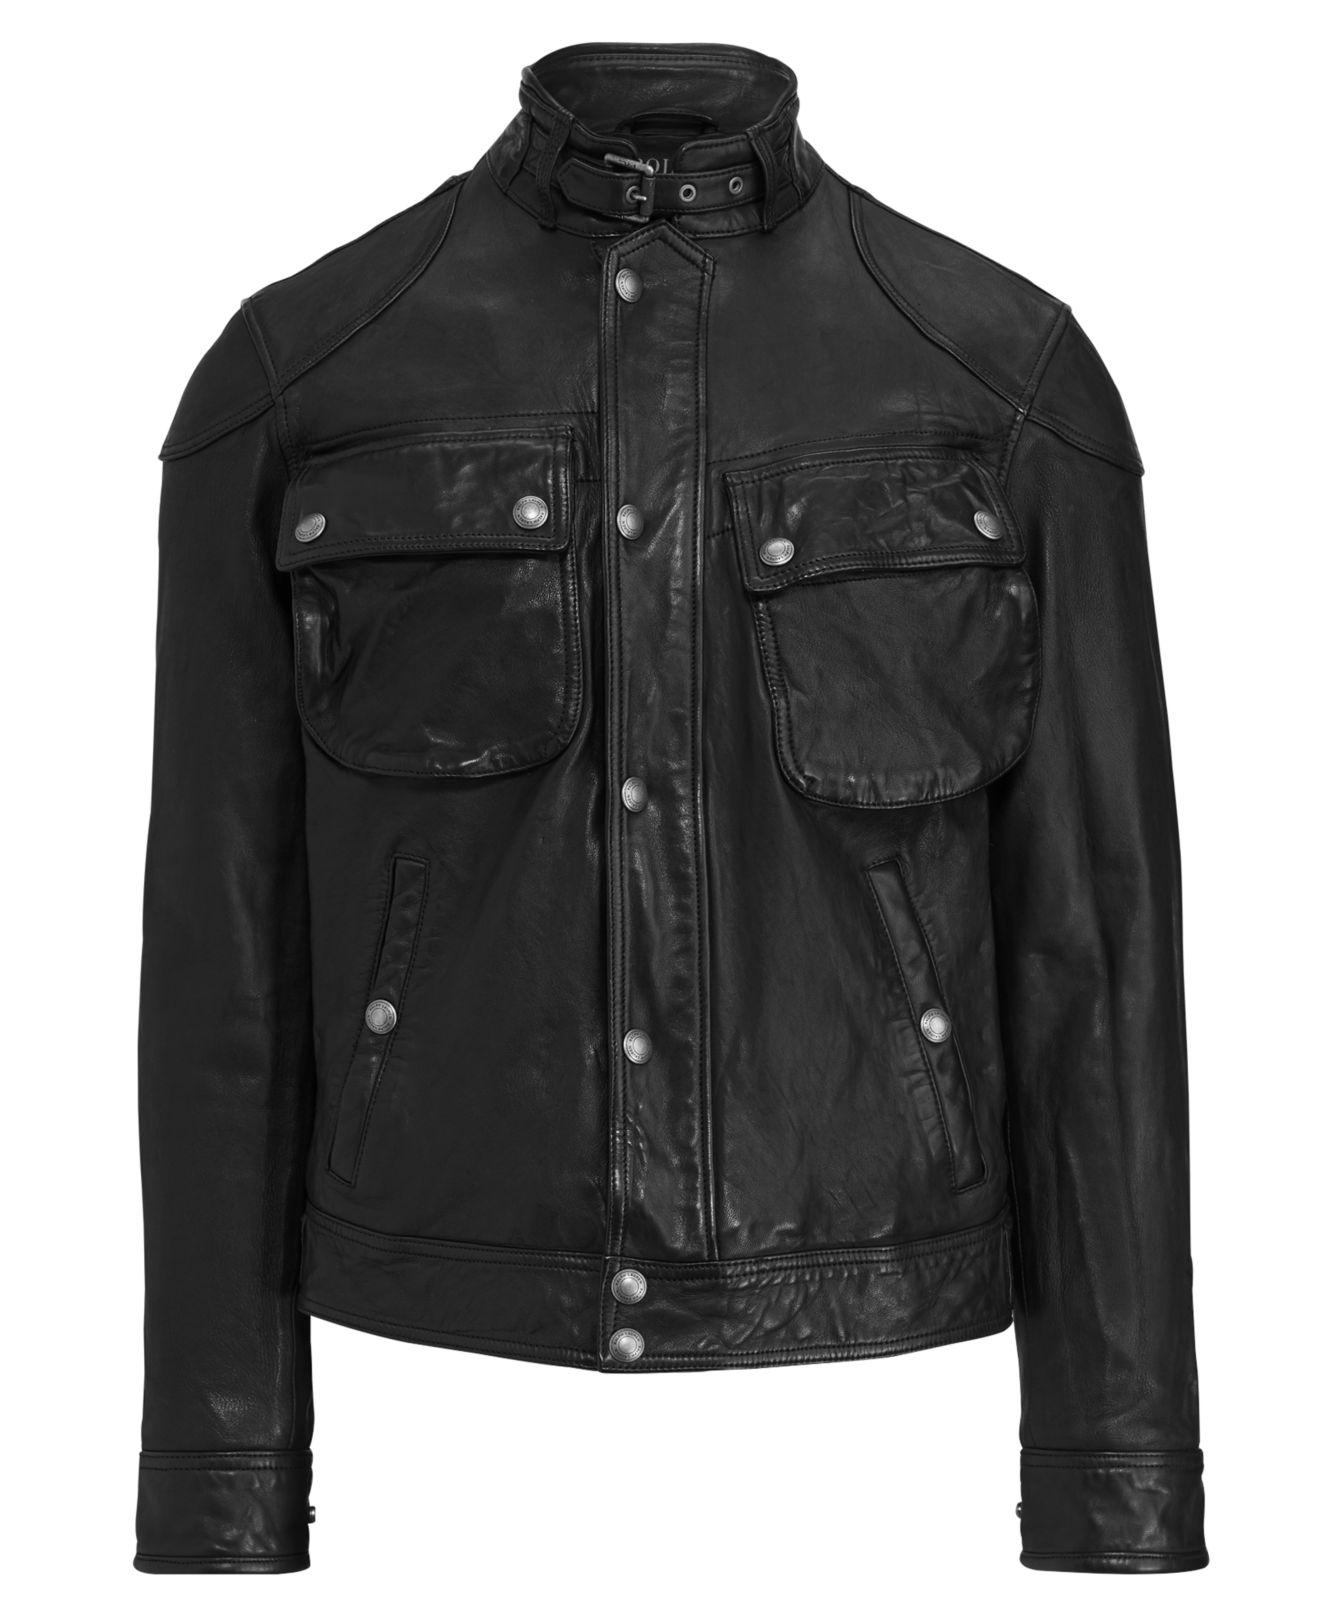 Polo Ralph Lauren Leather Biker Jacket in Black for Men - Lyst